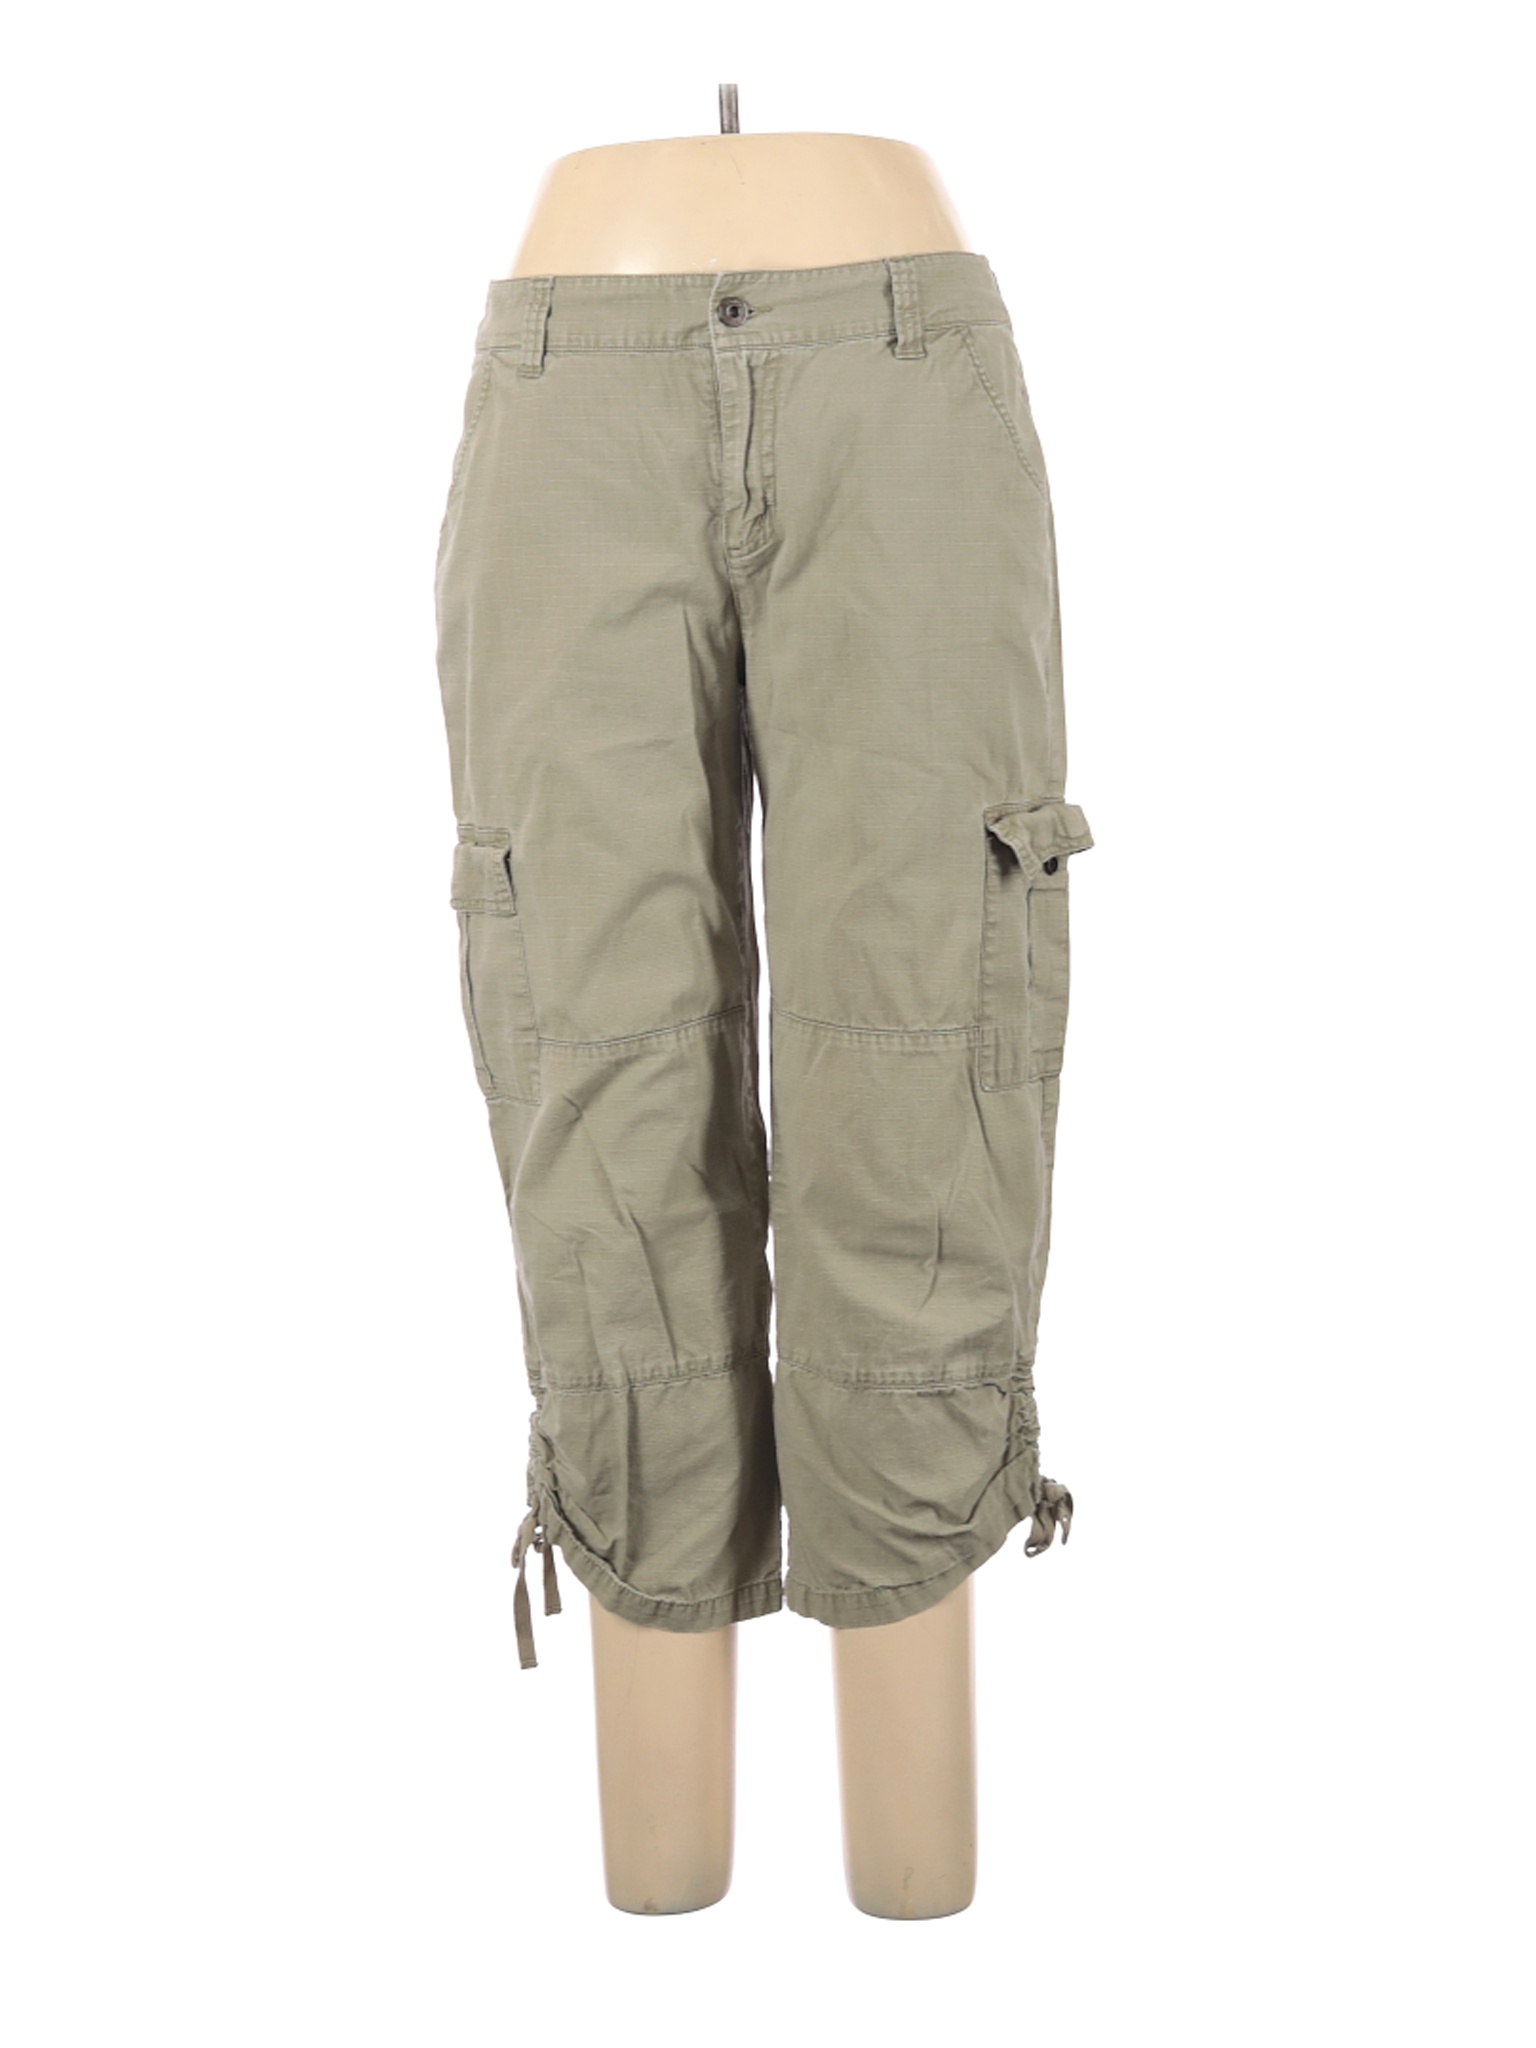 SONOMA life + style Women Green Cargo Pants 12 | eBay